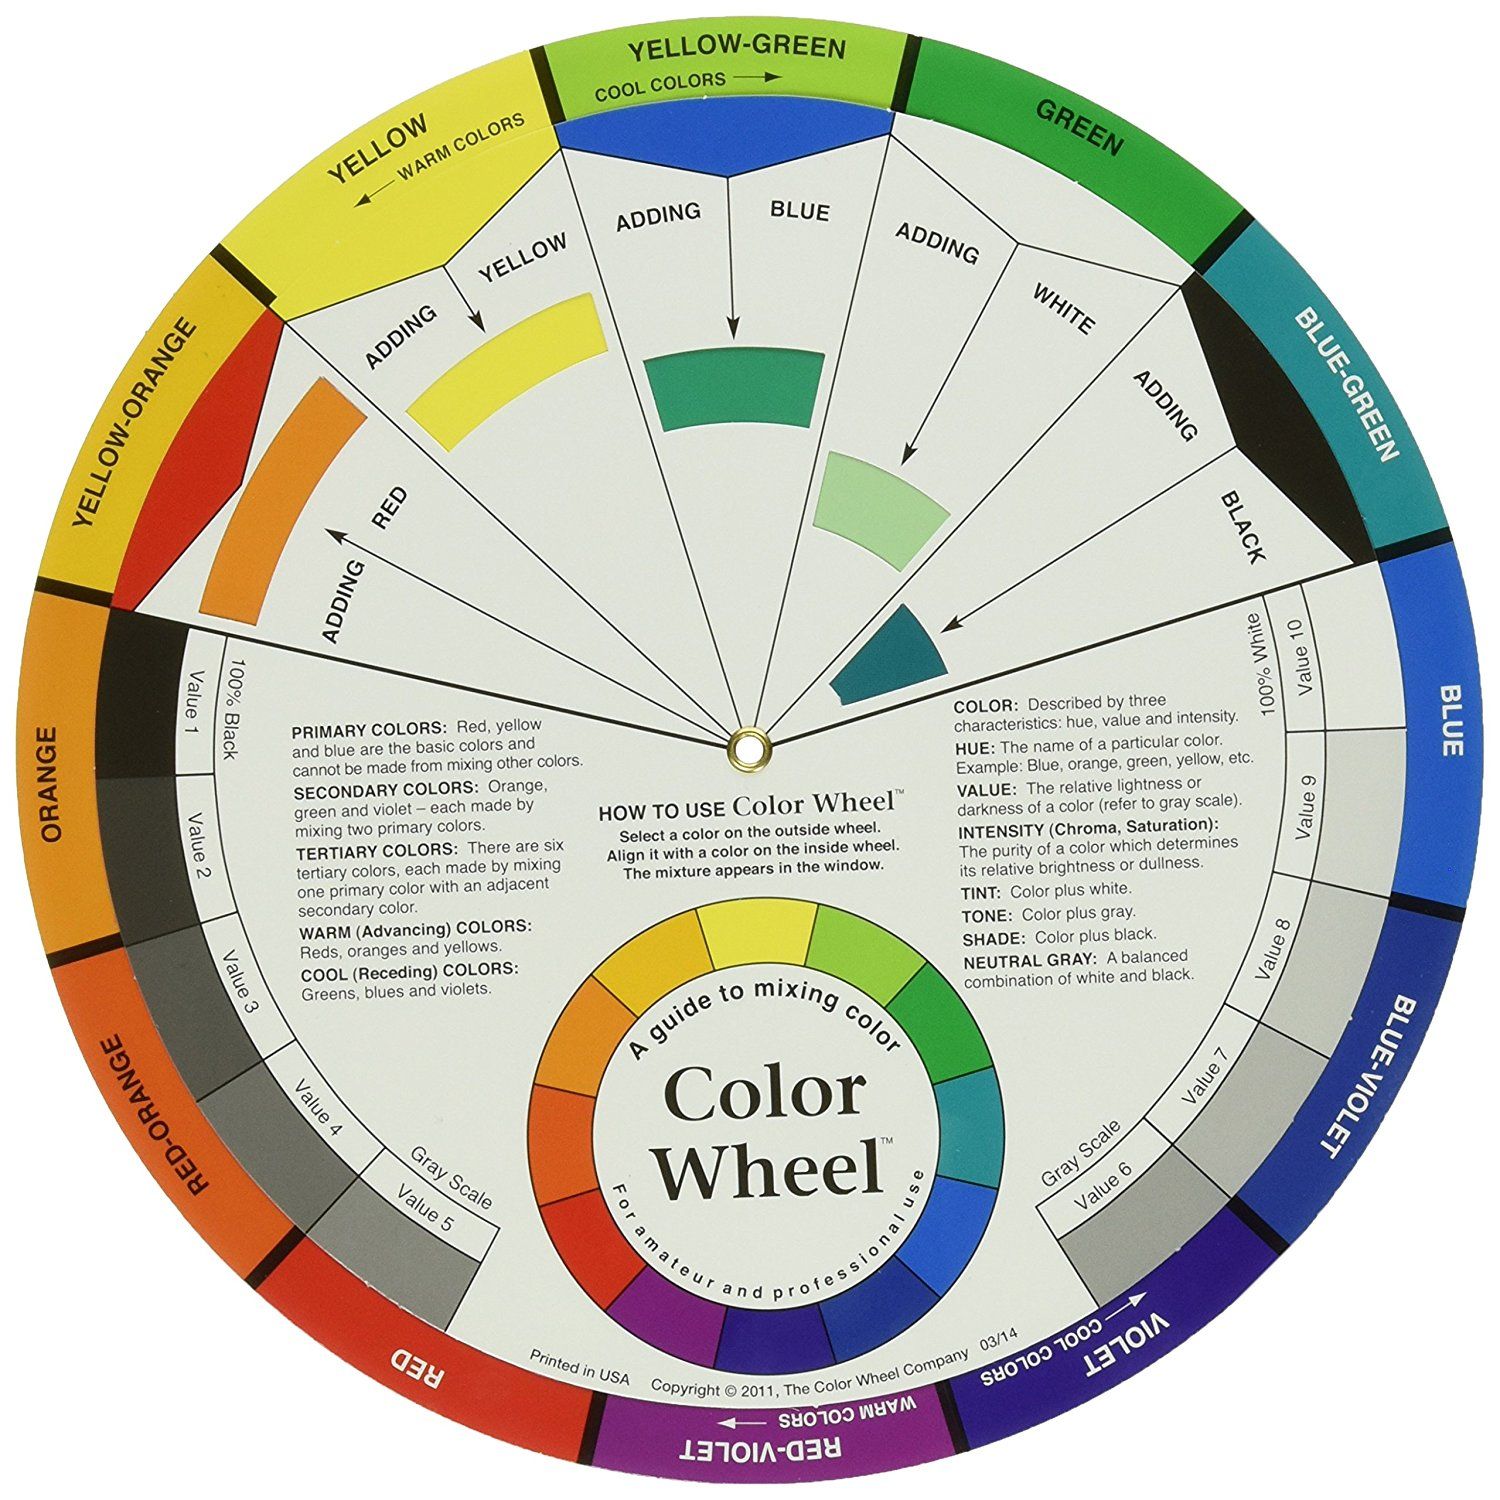 The Pocket Colour Wheel